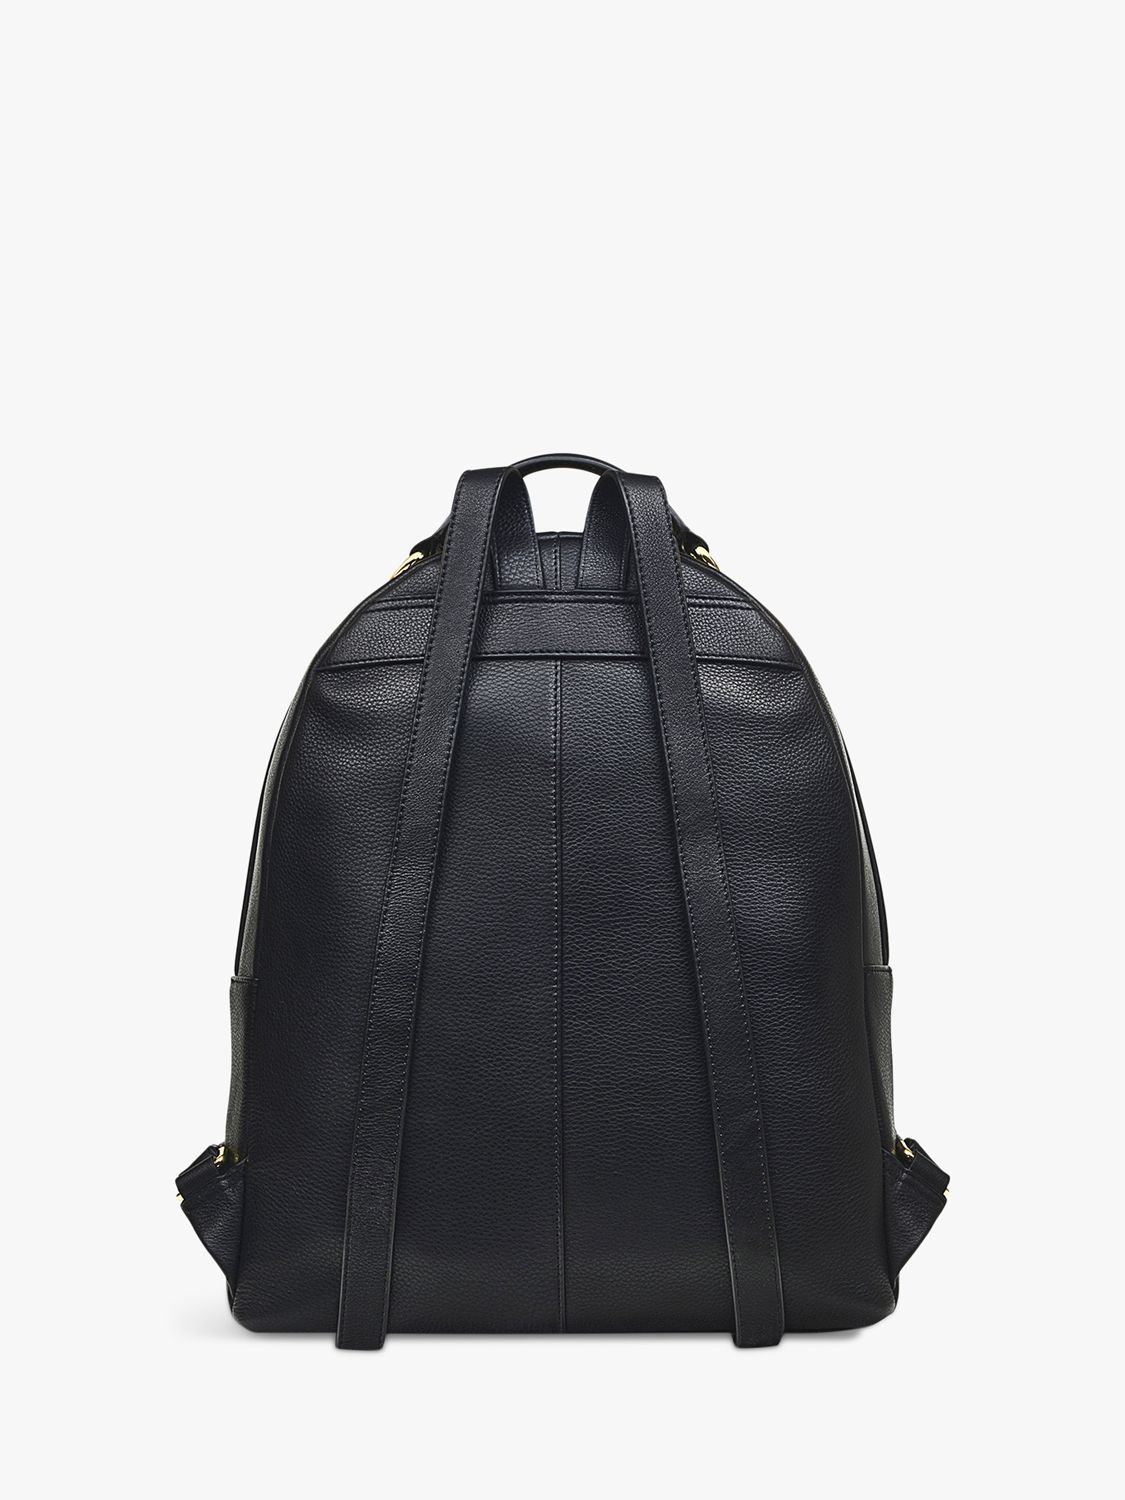 Buy Radley Witham Road Medium Leather Backpack Online at johnlewis.com